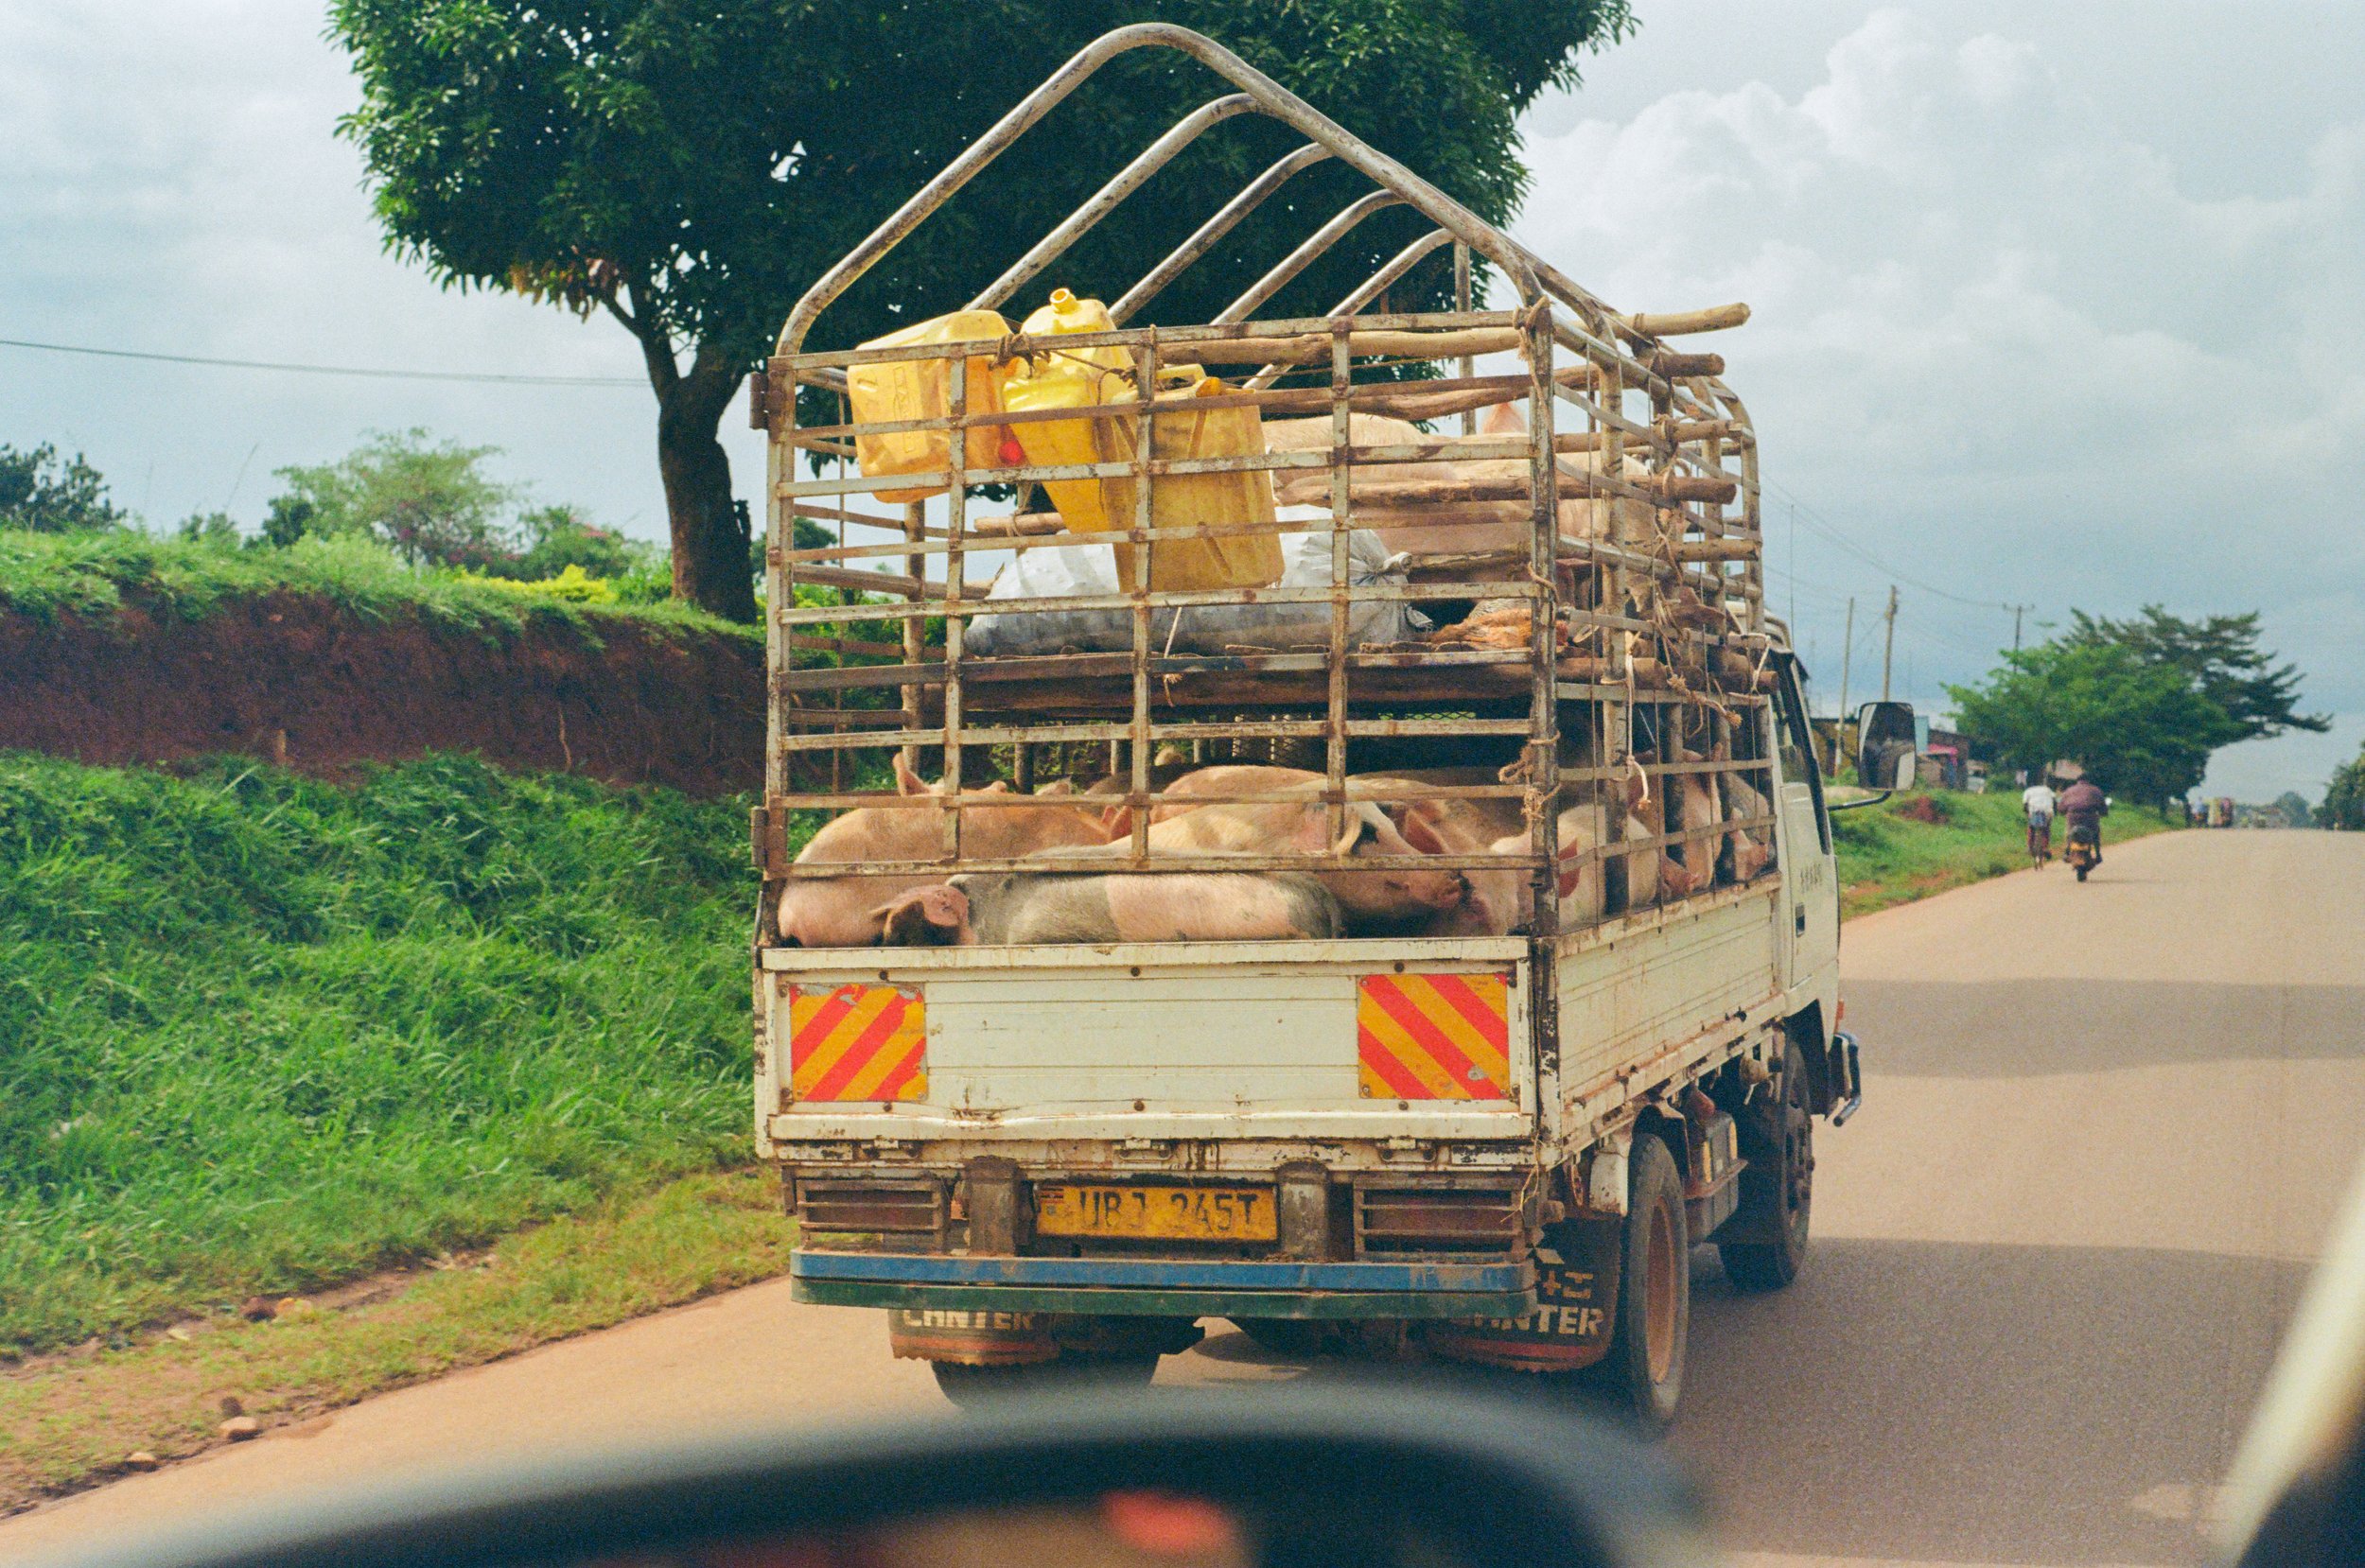 Hog truck on the Entebbe Highway. Fuji 200 35mm. 